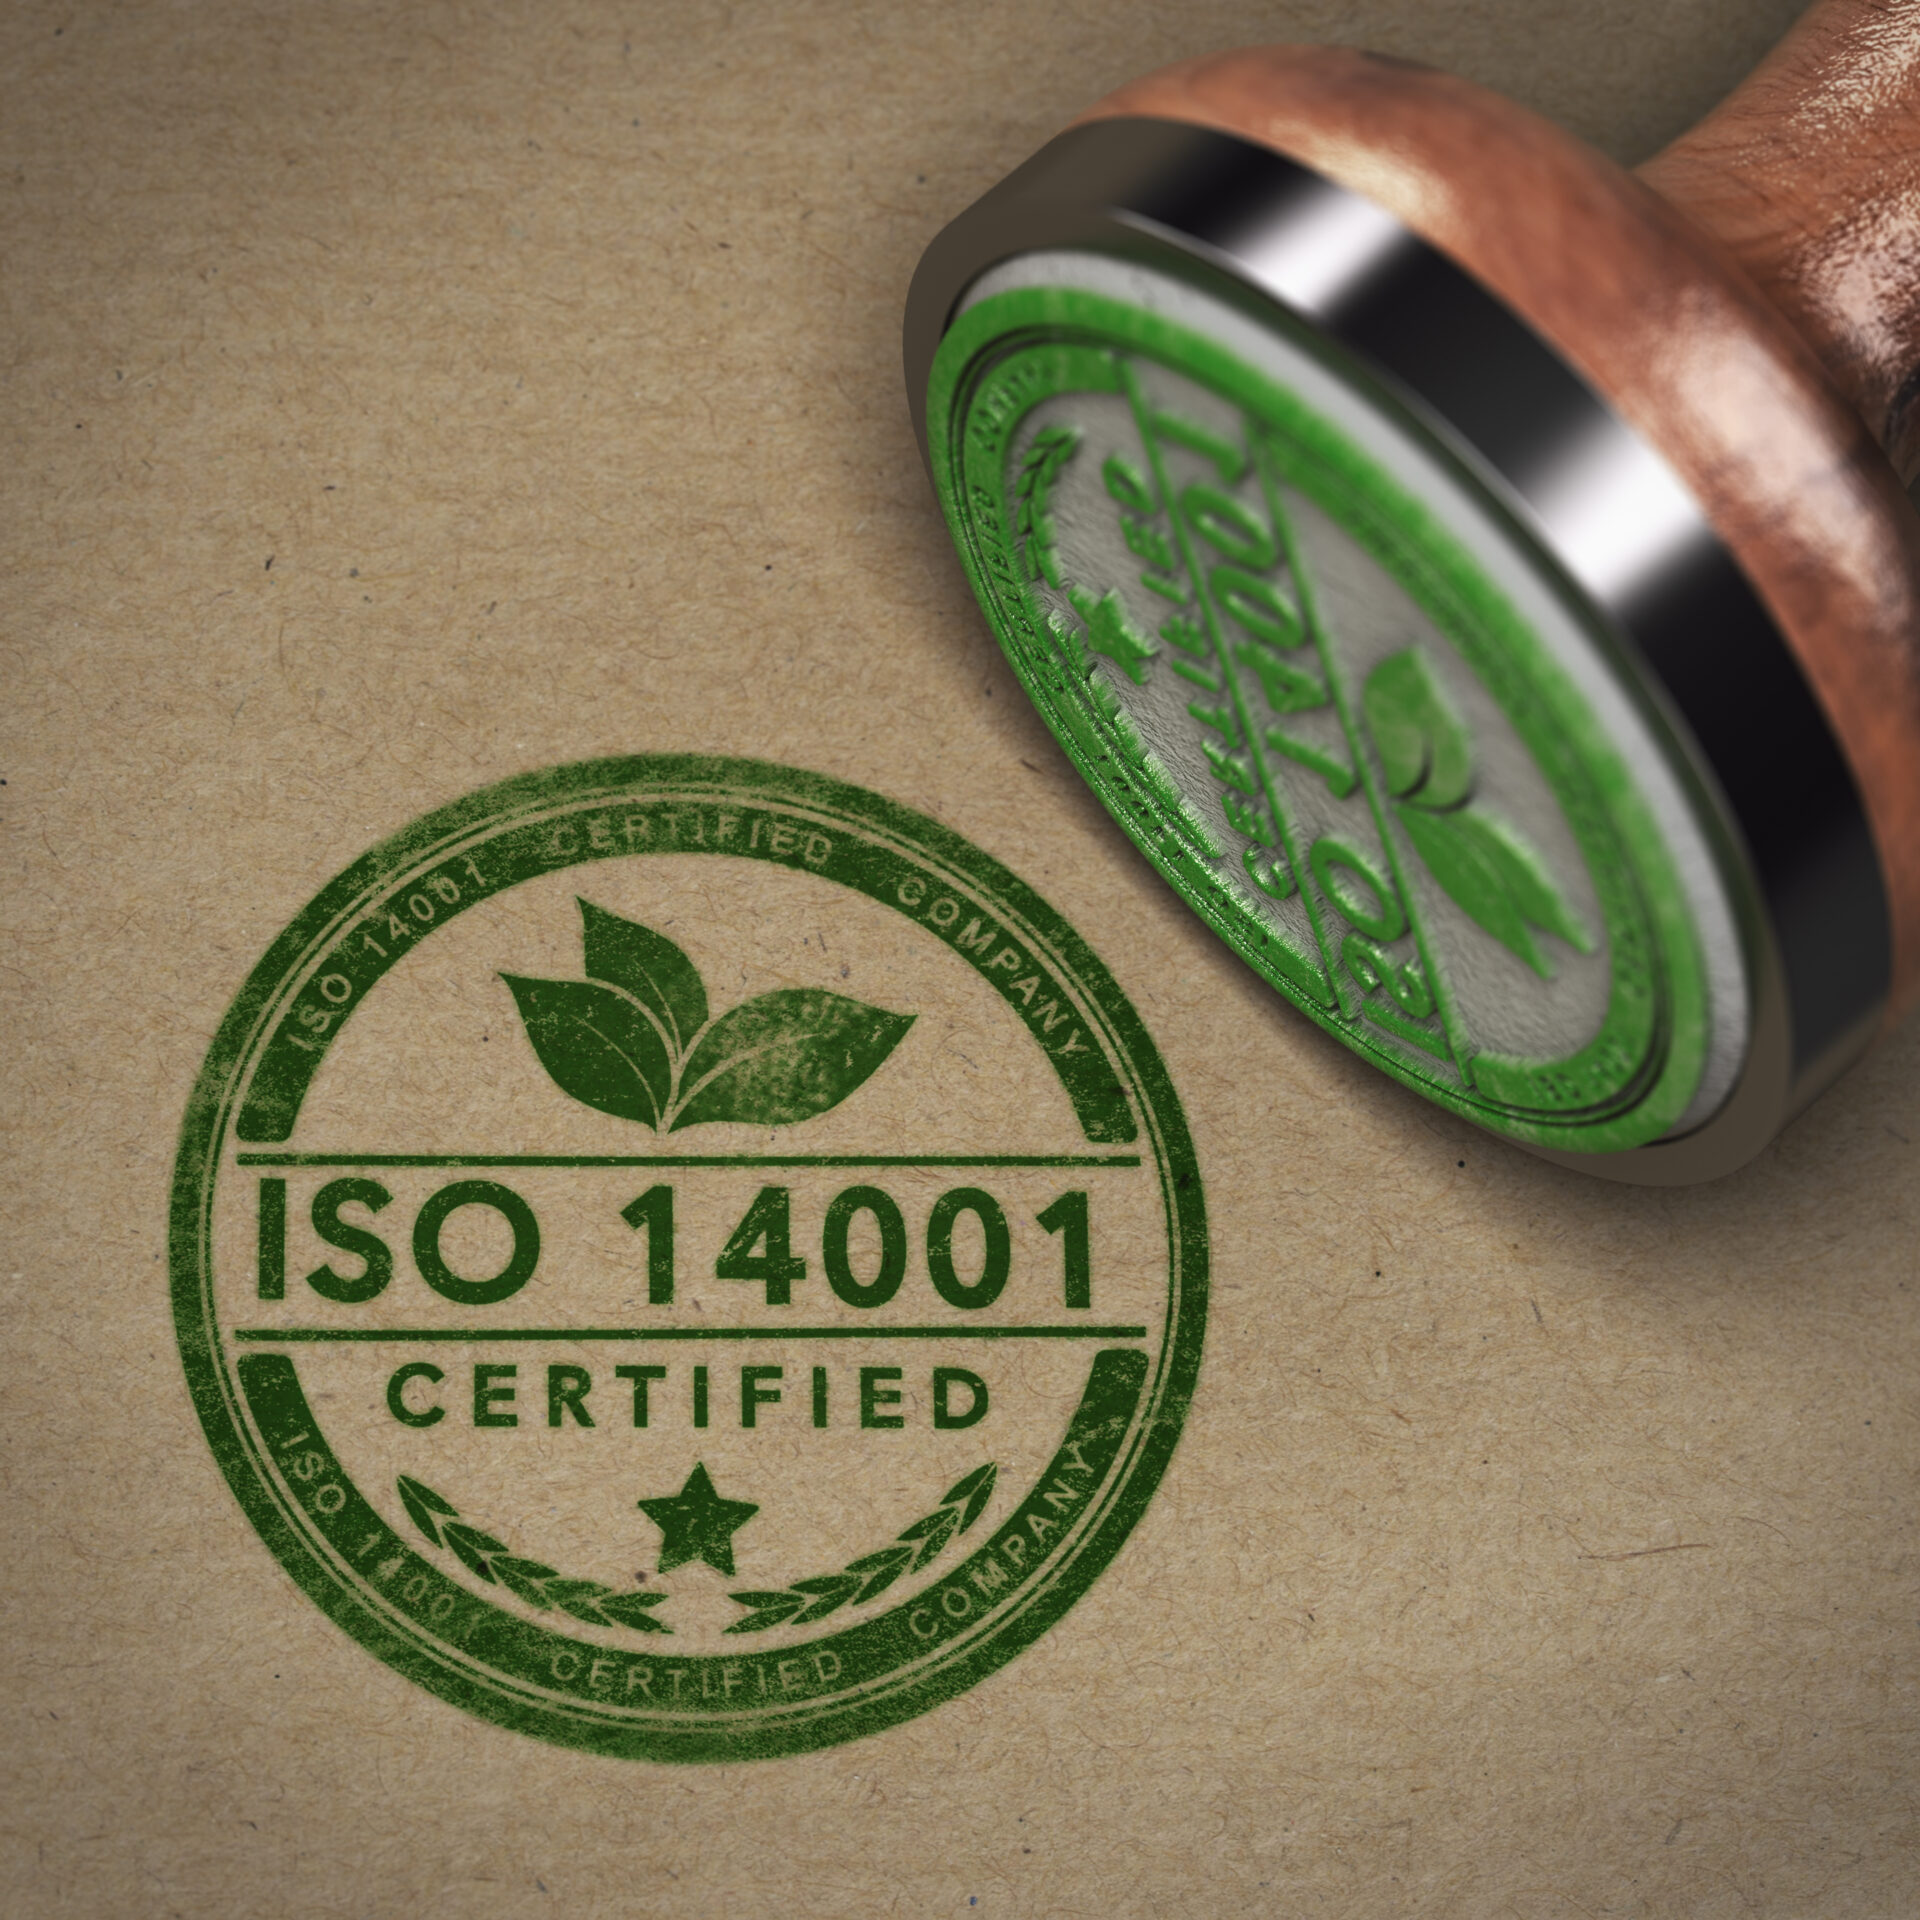 Worldsensing is now ISO 14001 certified